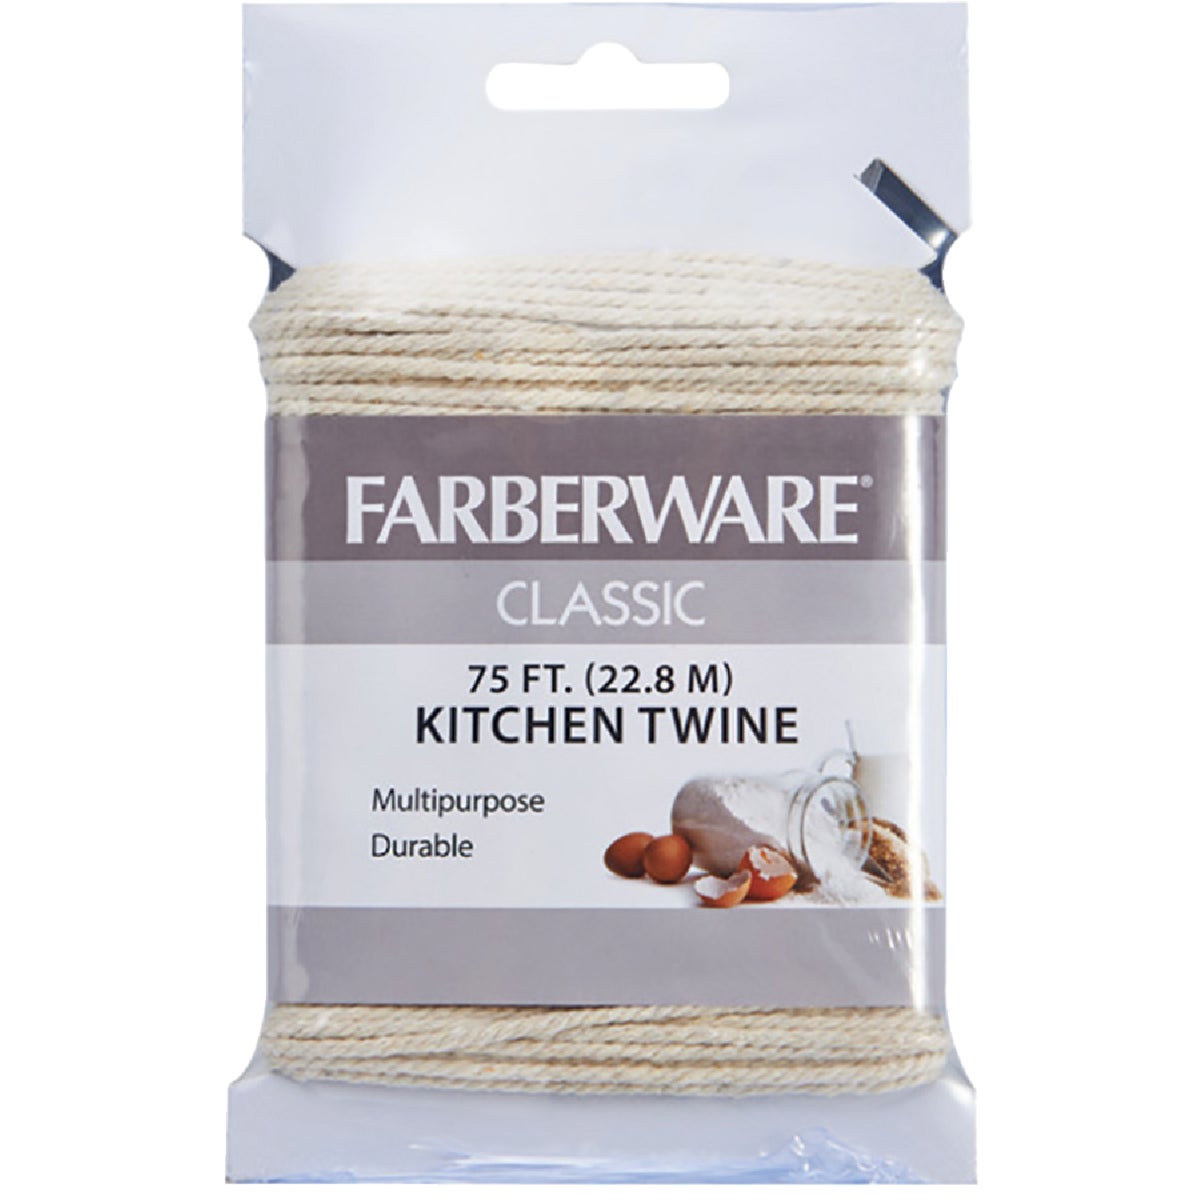 Farberware Classic 75 Ft. Kitchen Twine